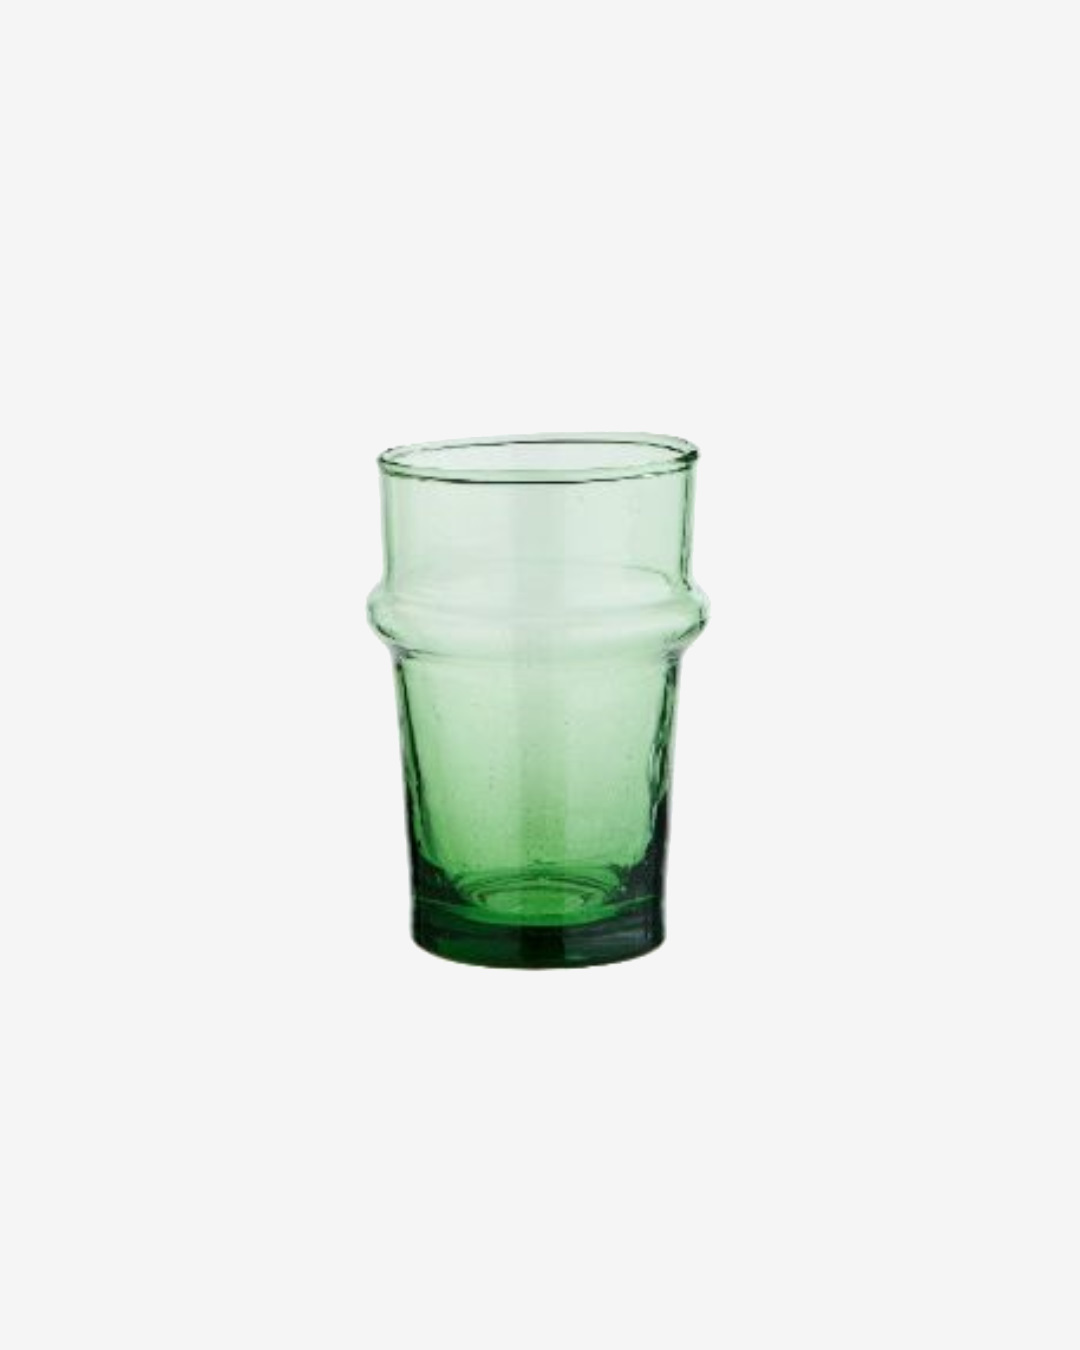 Green glass drinking glass